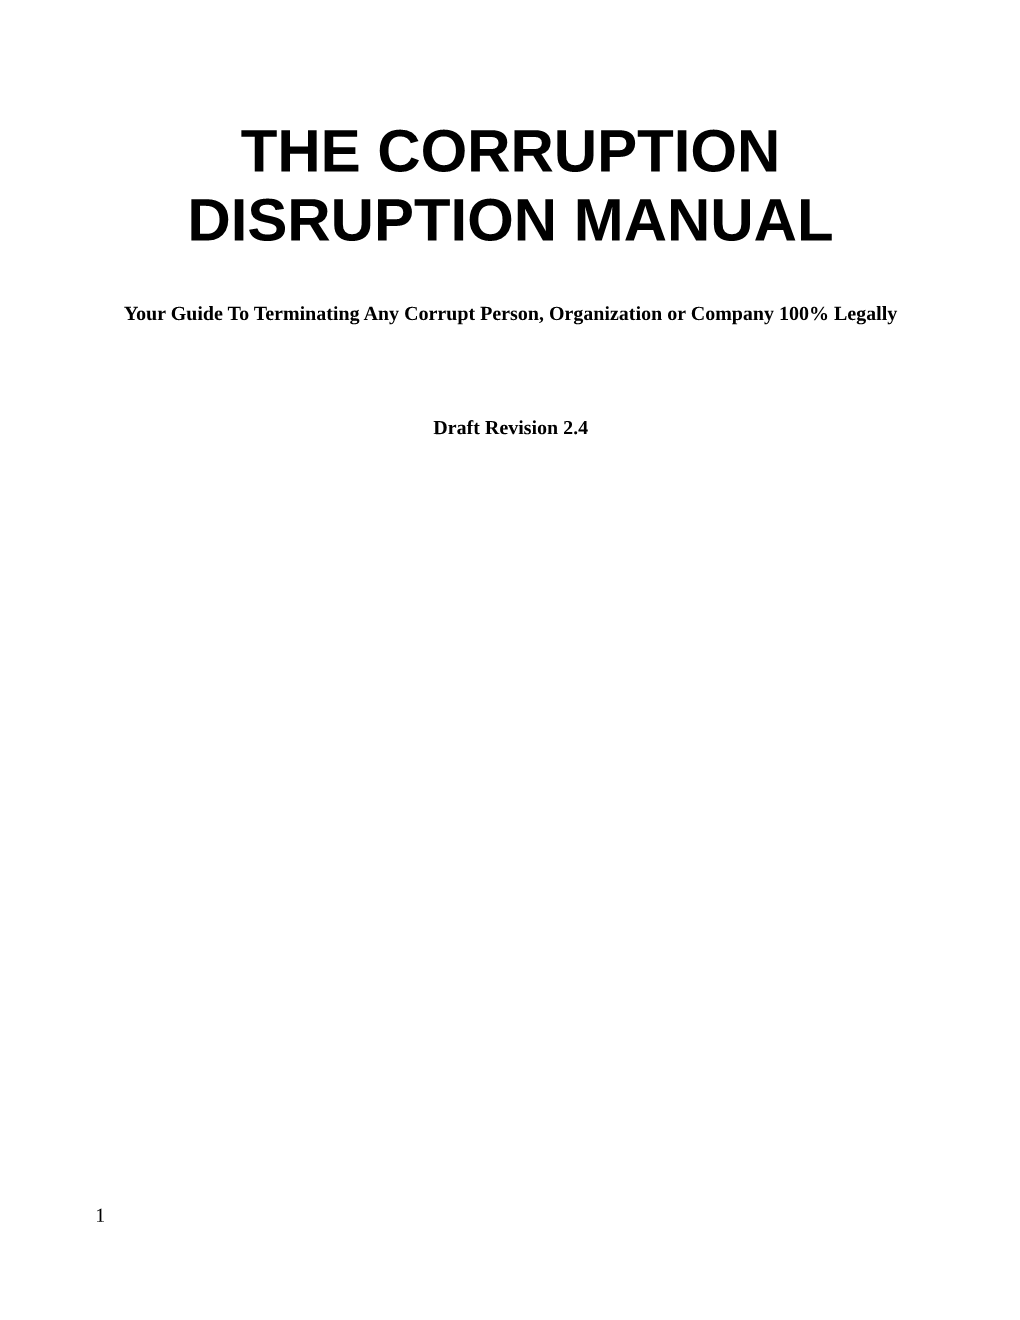 The Corruption Disruption Manual